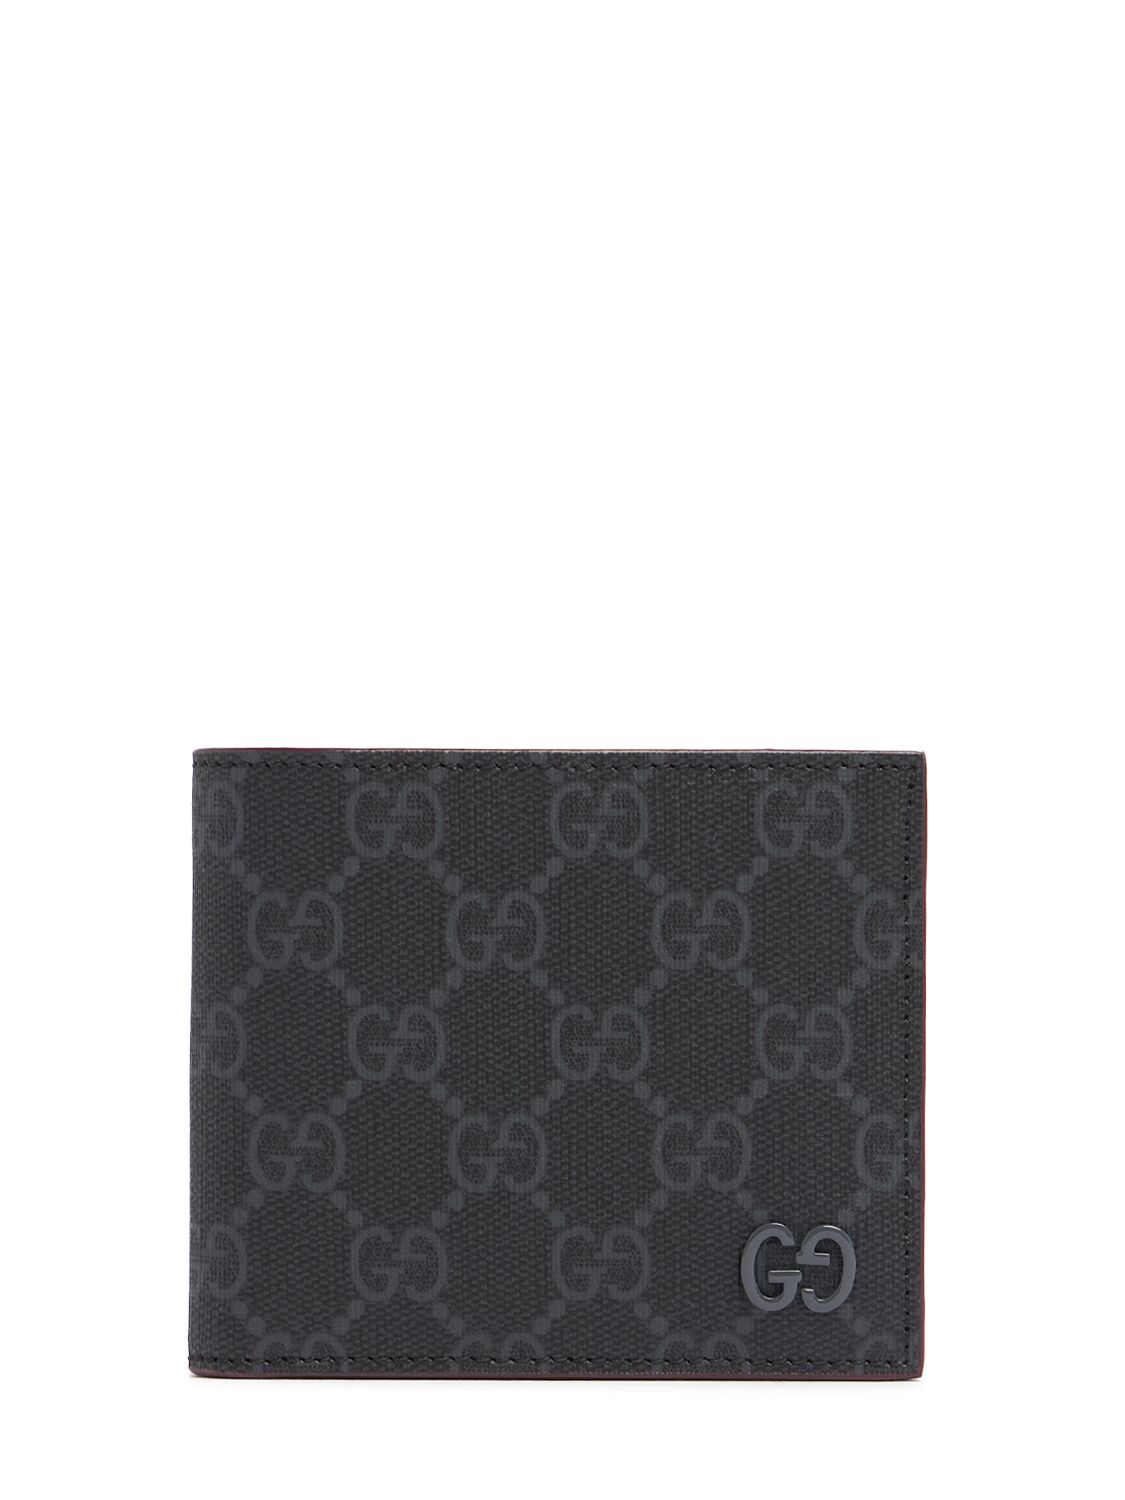 Gucci Bicolor Gg Billfold Wallet In Black/bordeaux